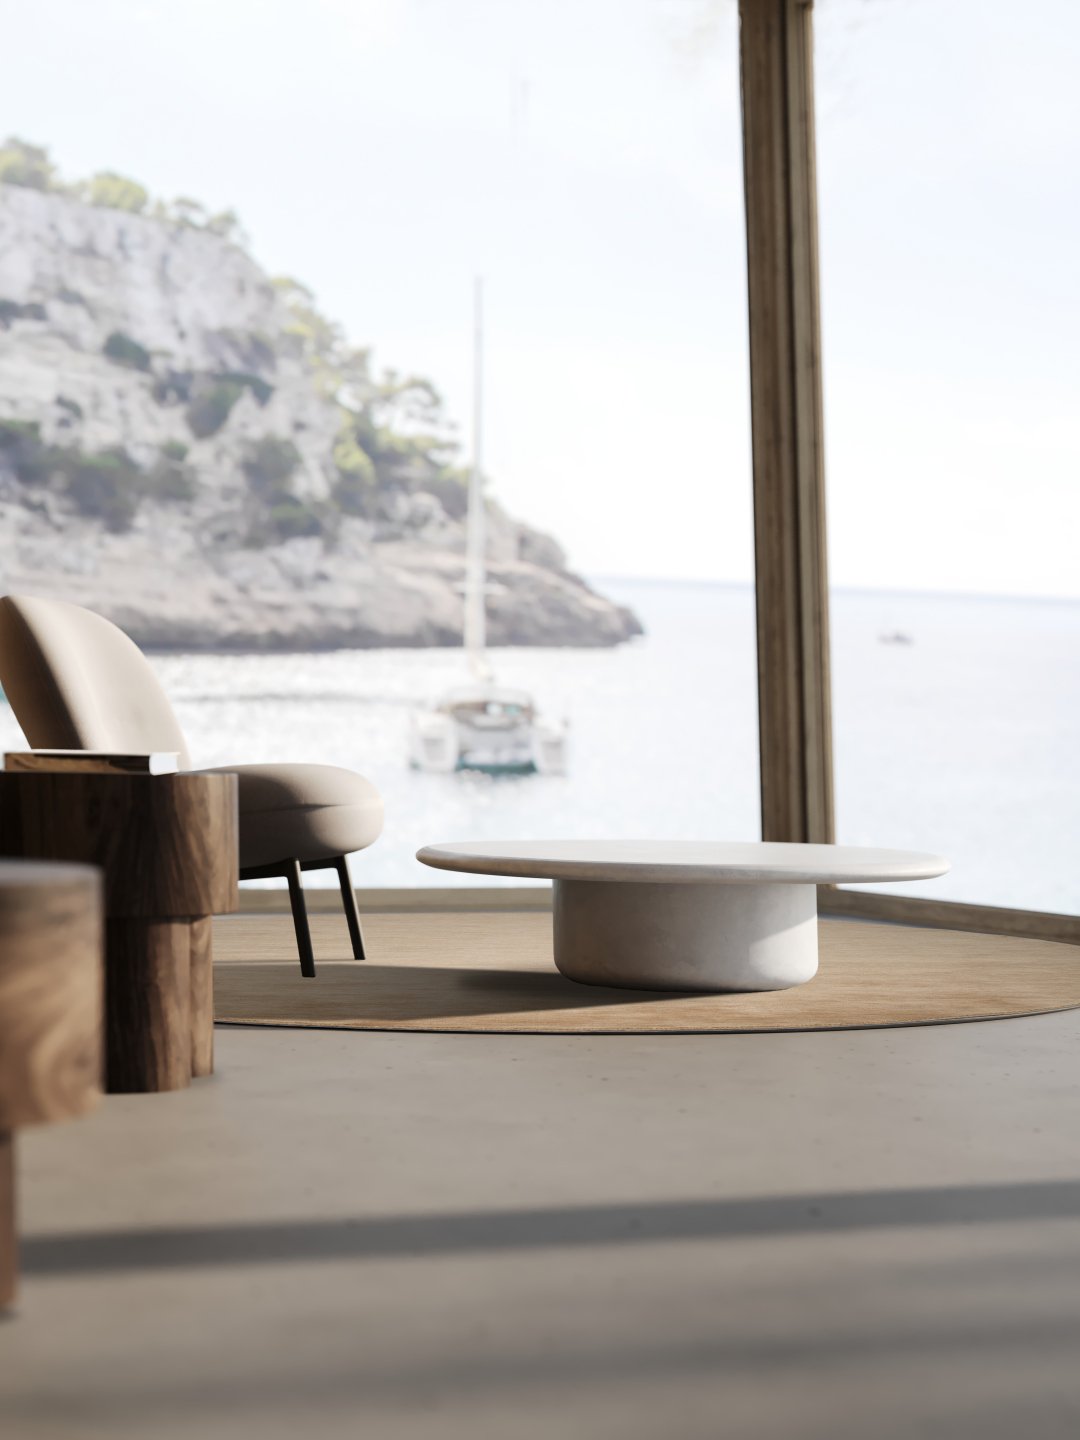 Usoo coffee Table Salt Insitu White Tallira Furniture, for indoor/outdoor use by Muundo